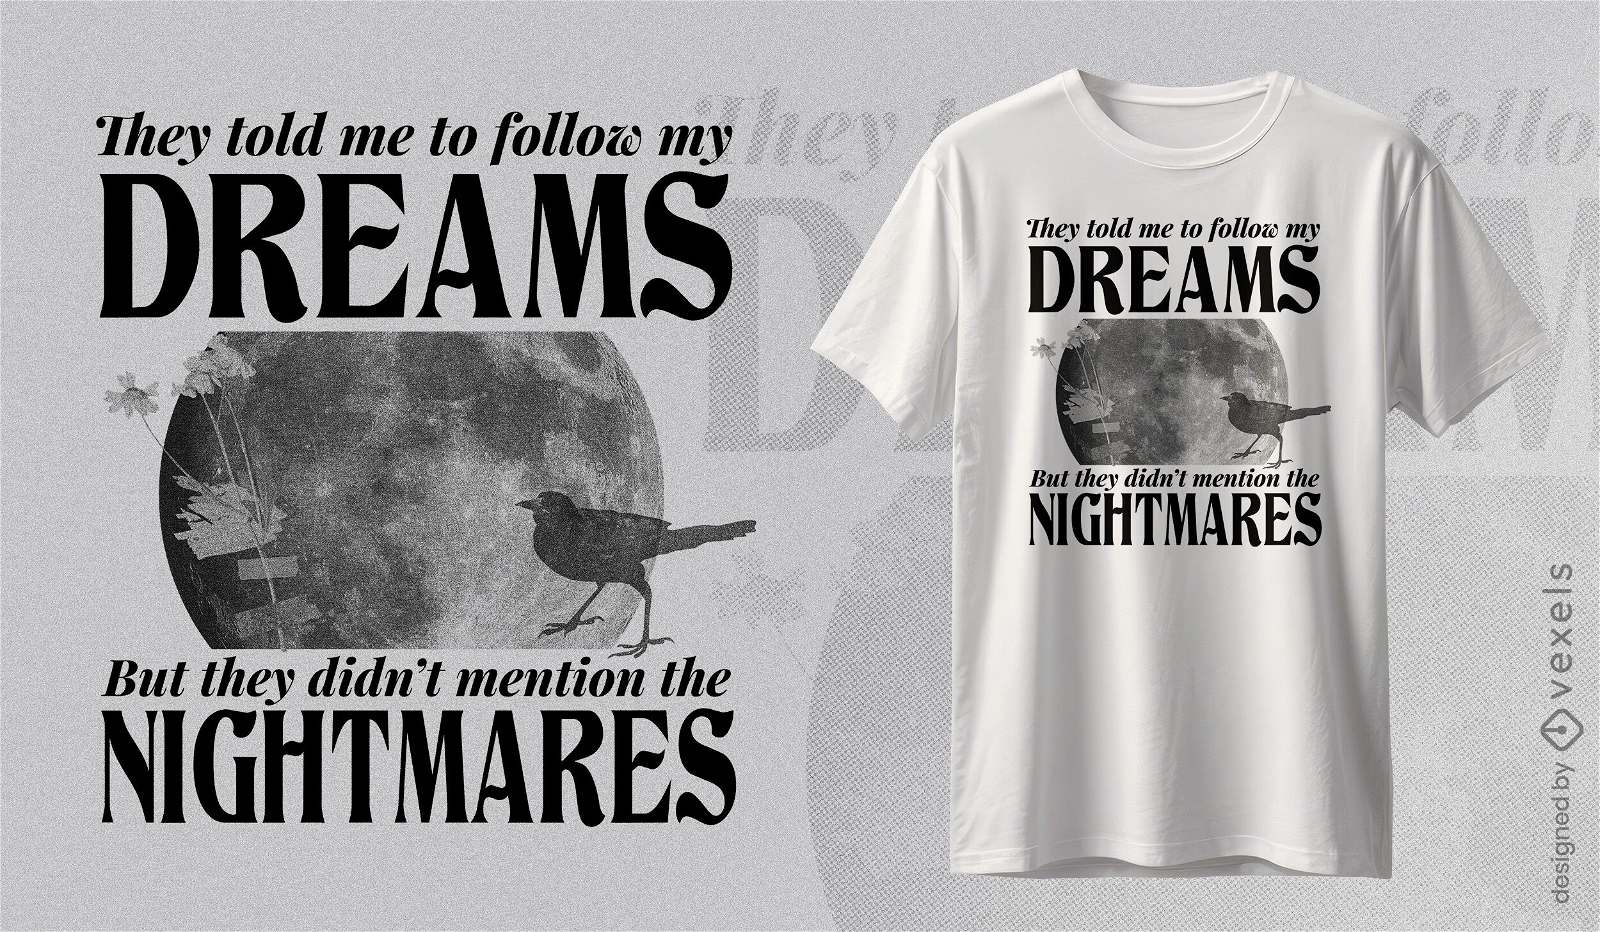 Dreams and nightmares bird t-shirt design